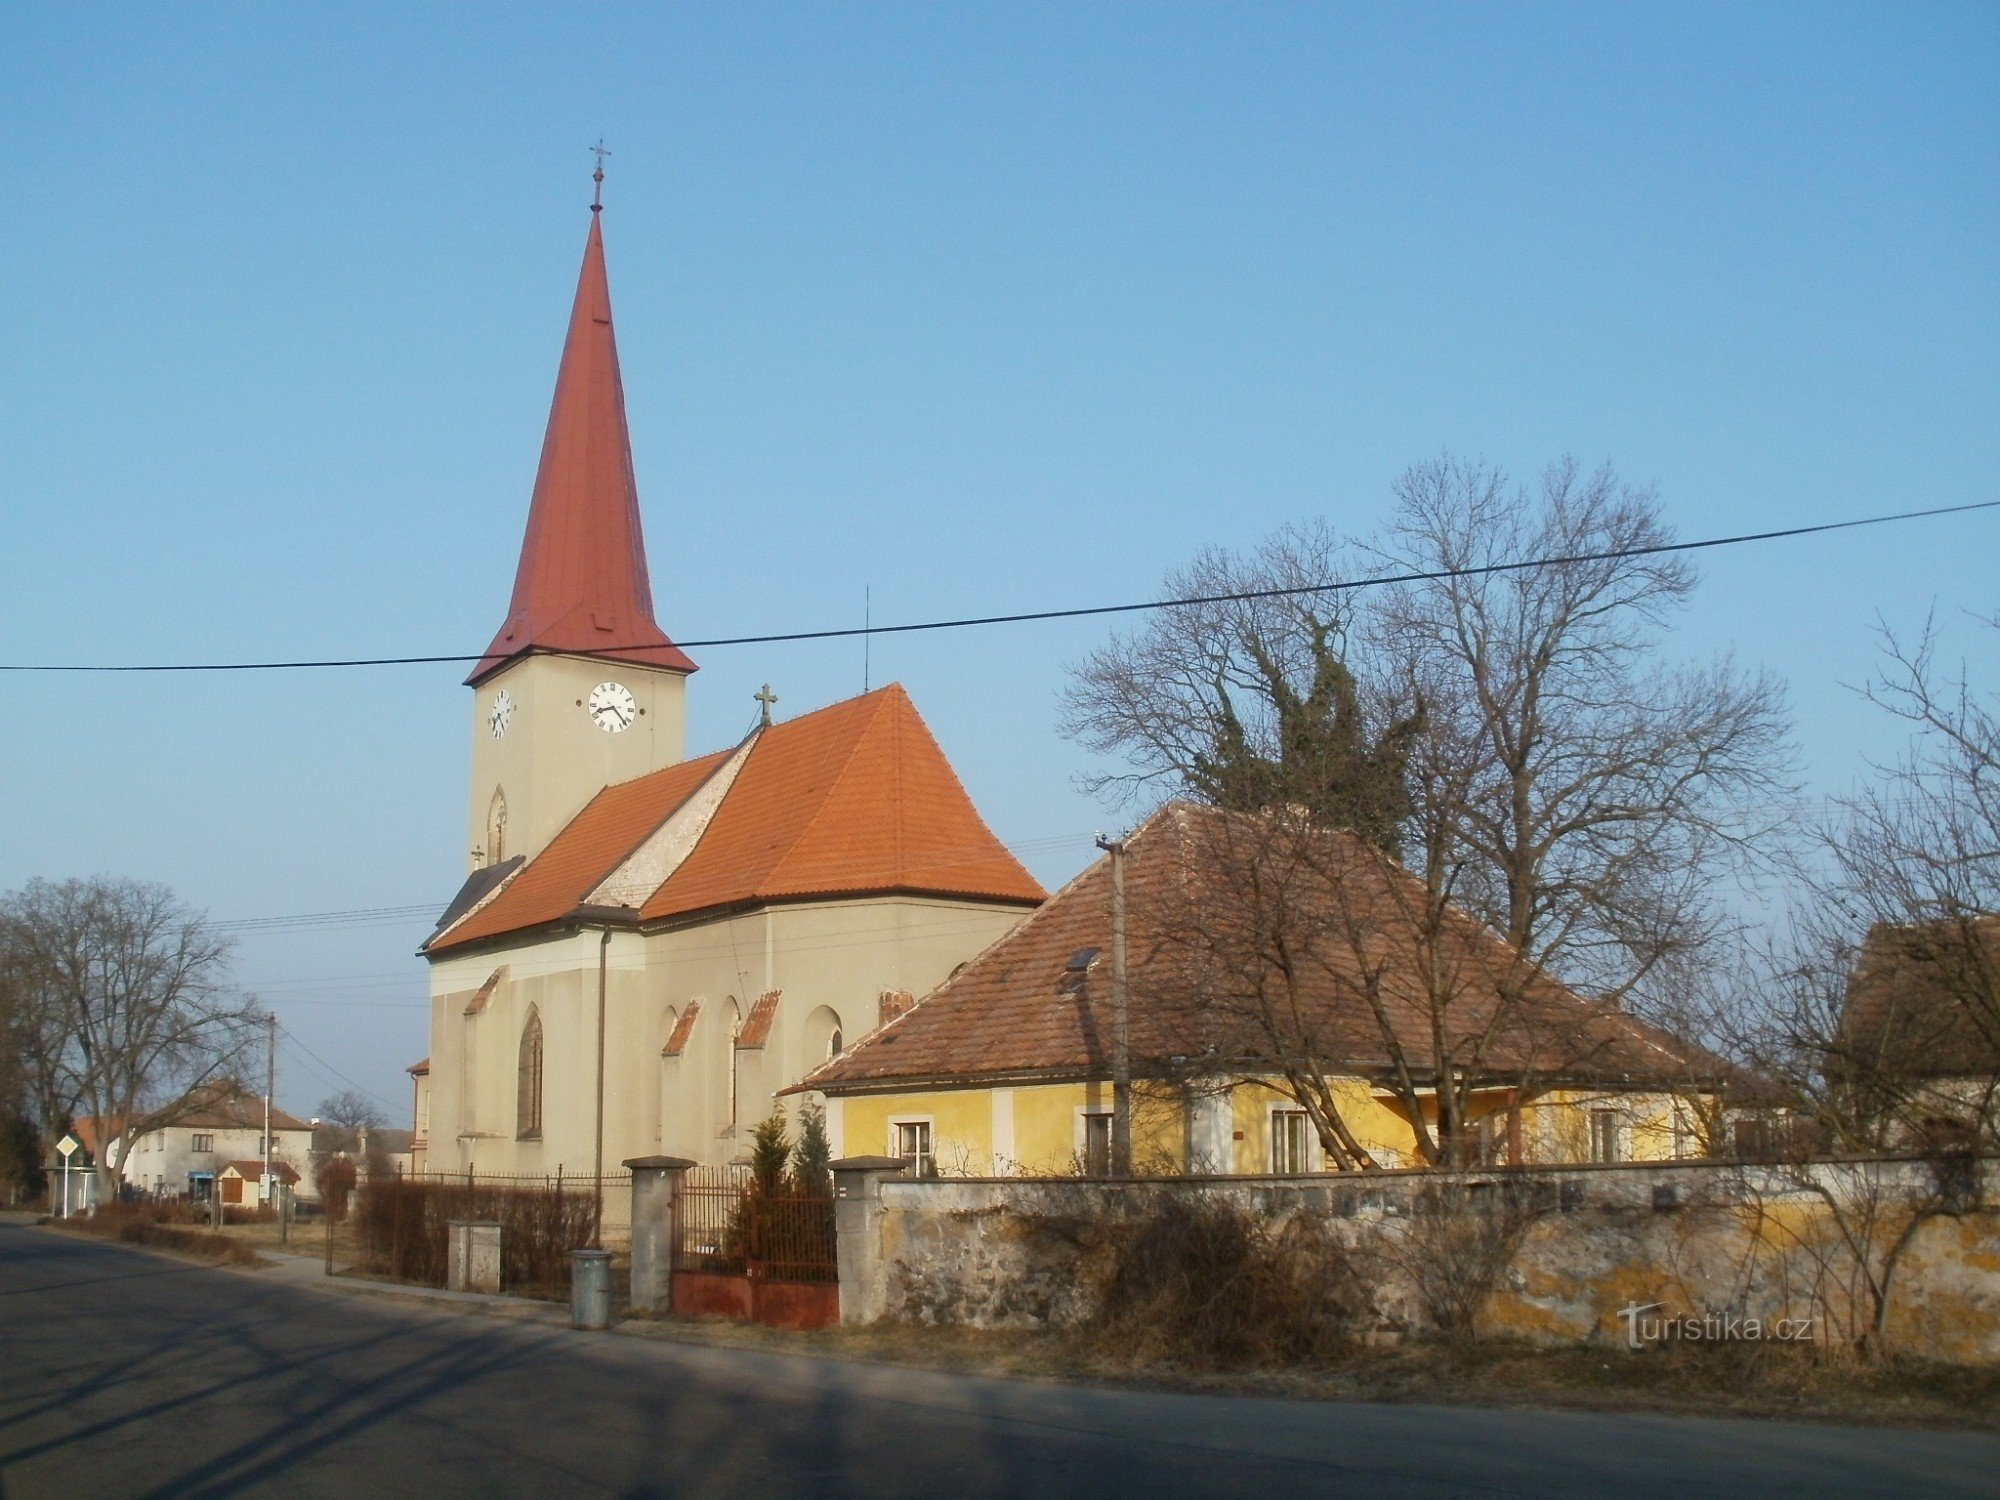 Kunětice - igreja de St. Bartolomeu